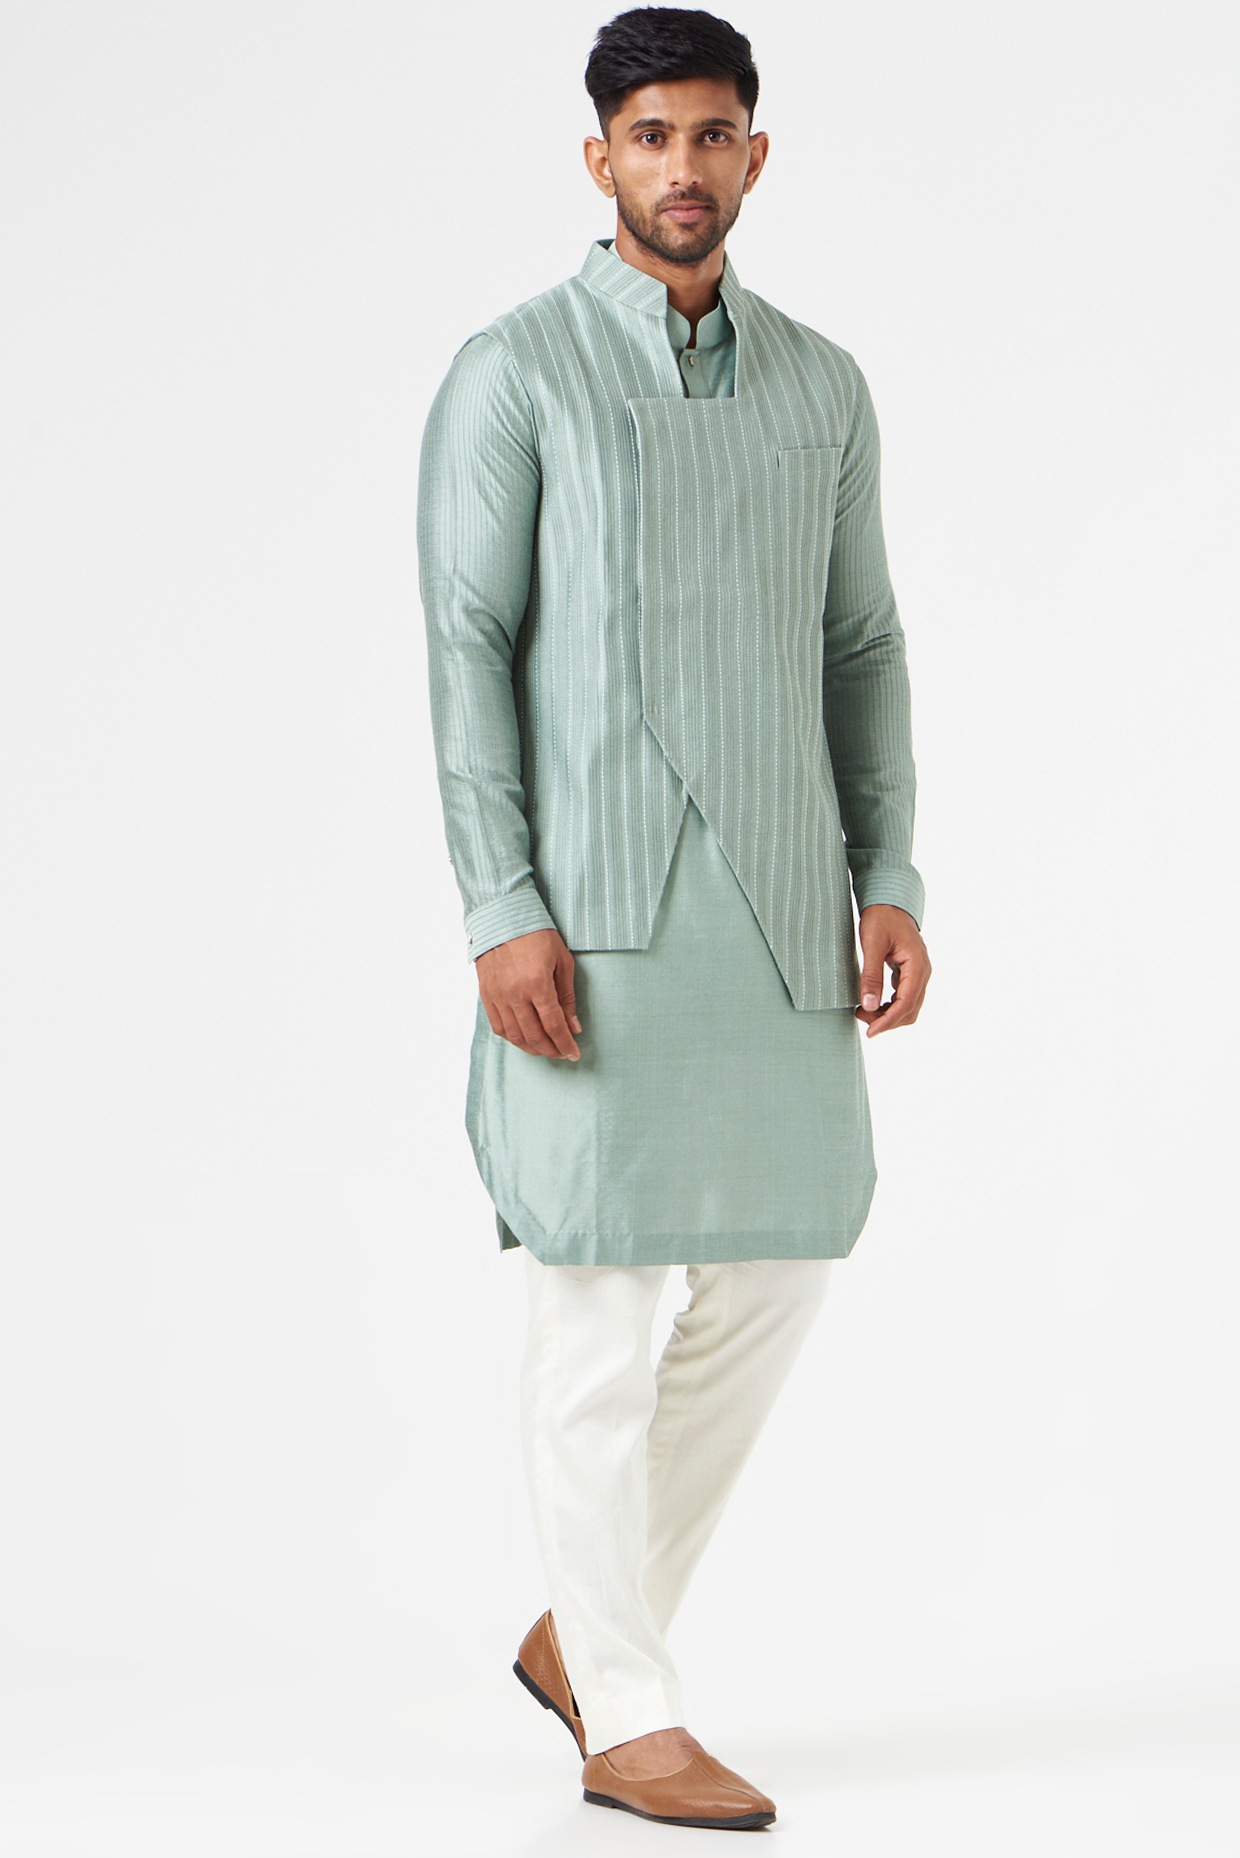 Olive Green kurta jacket set for Men – paanericlothing